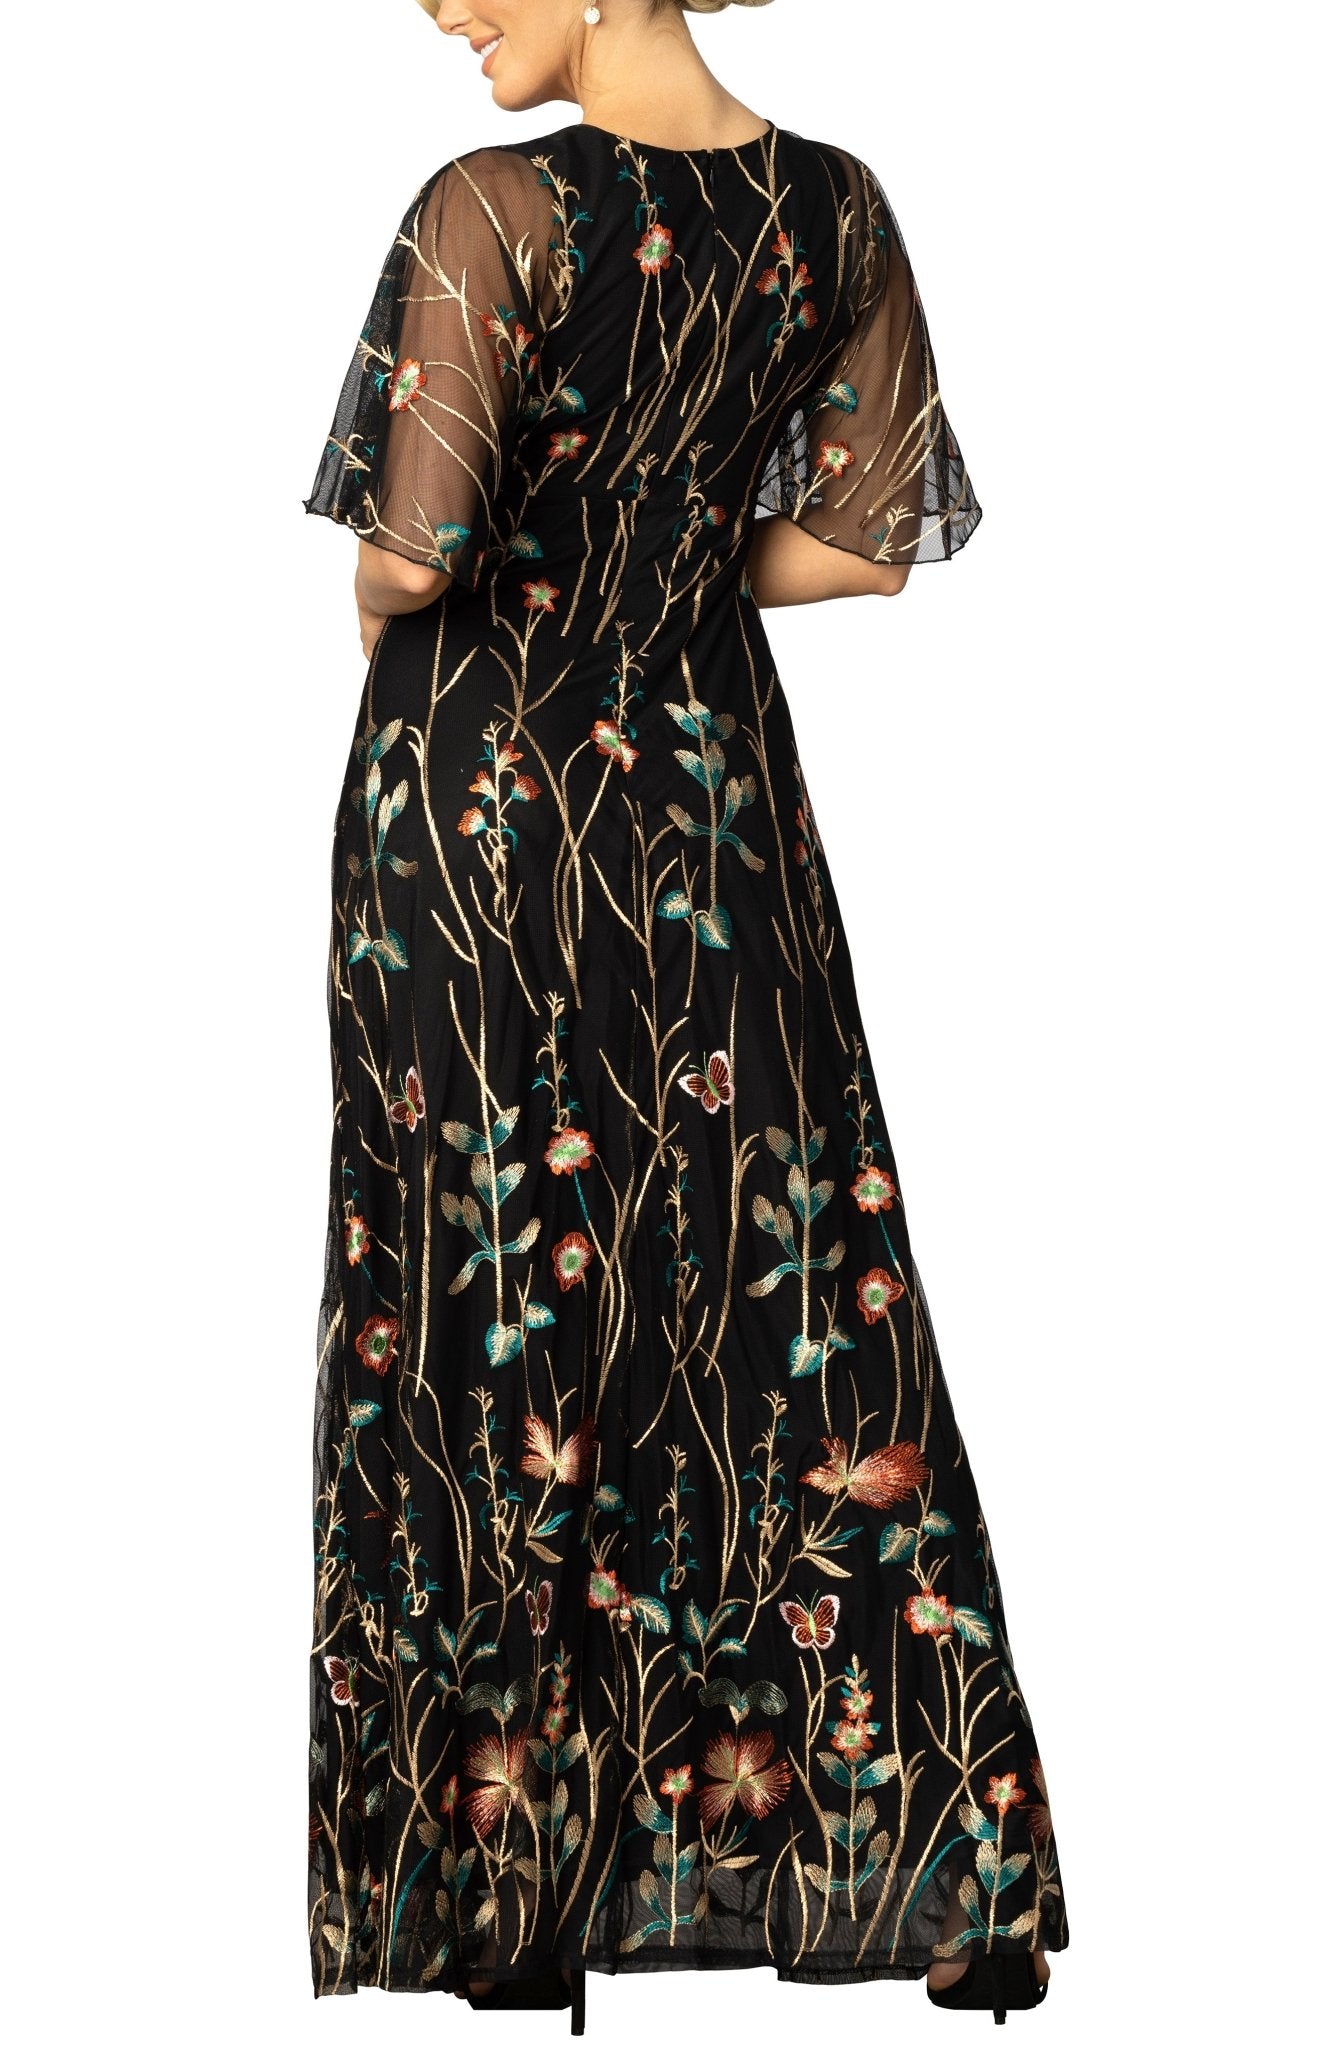 Embroidered Elegance Evening Gown - DressbarnDresses